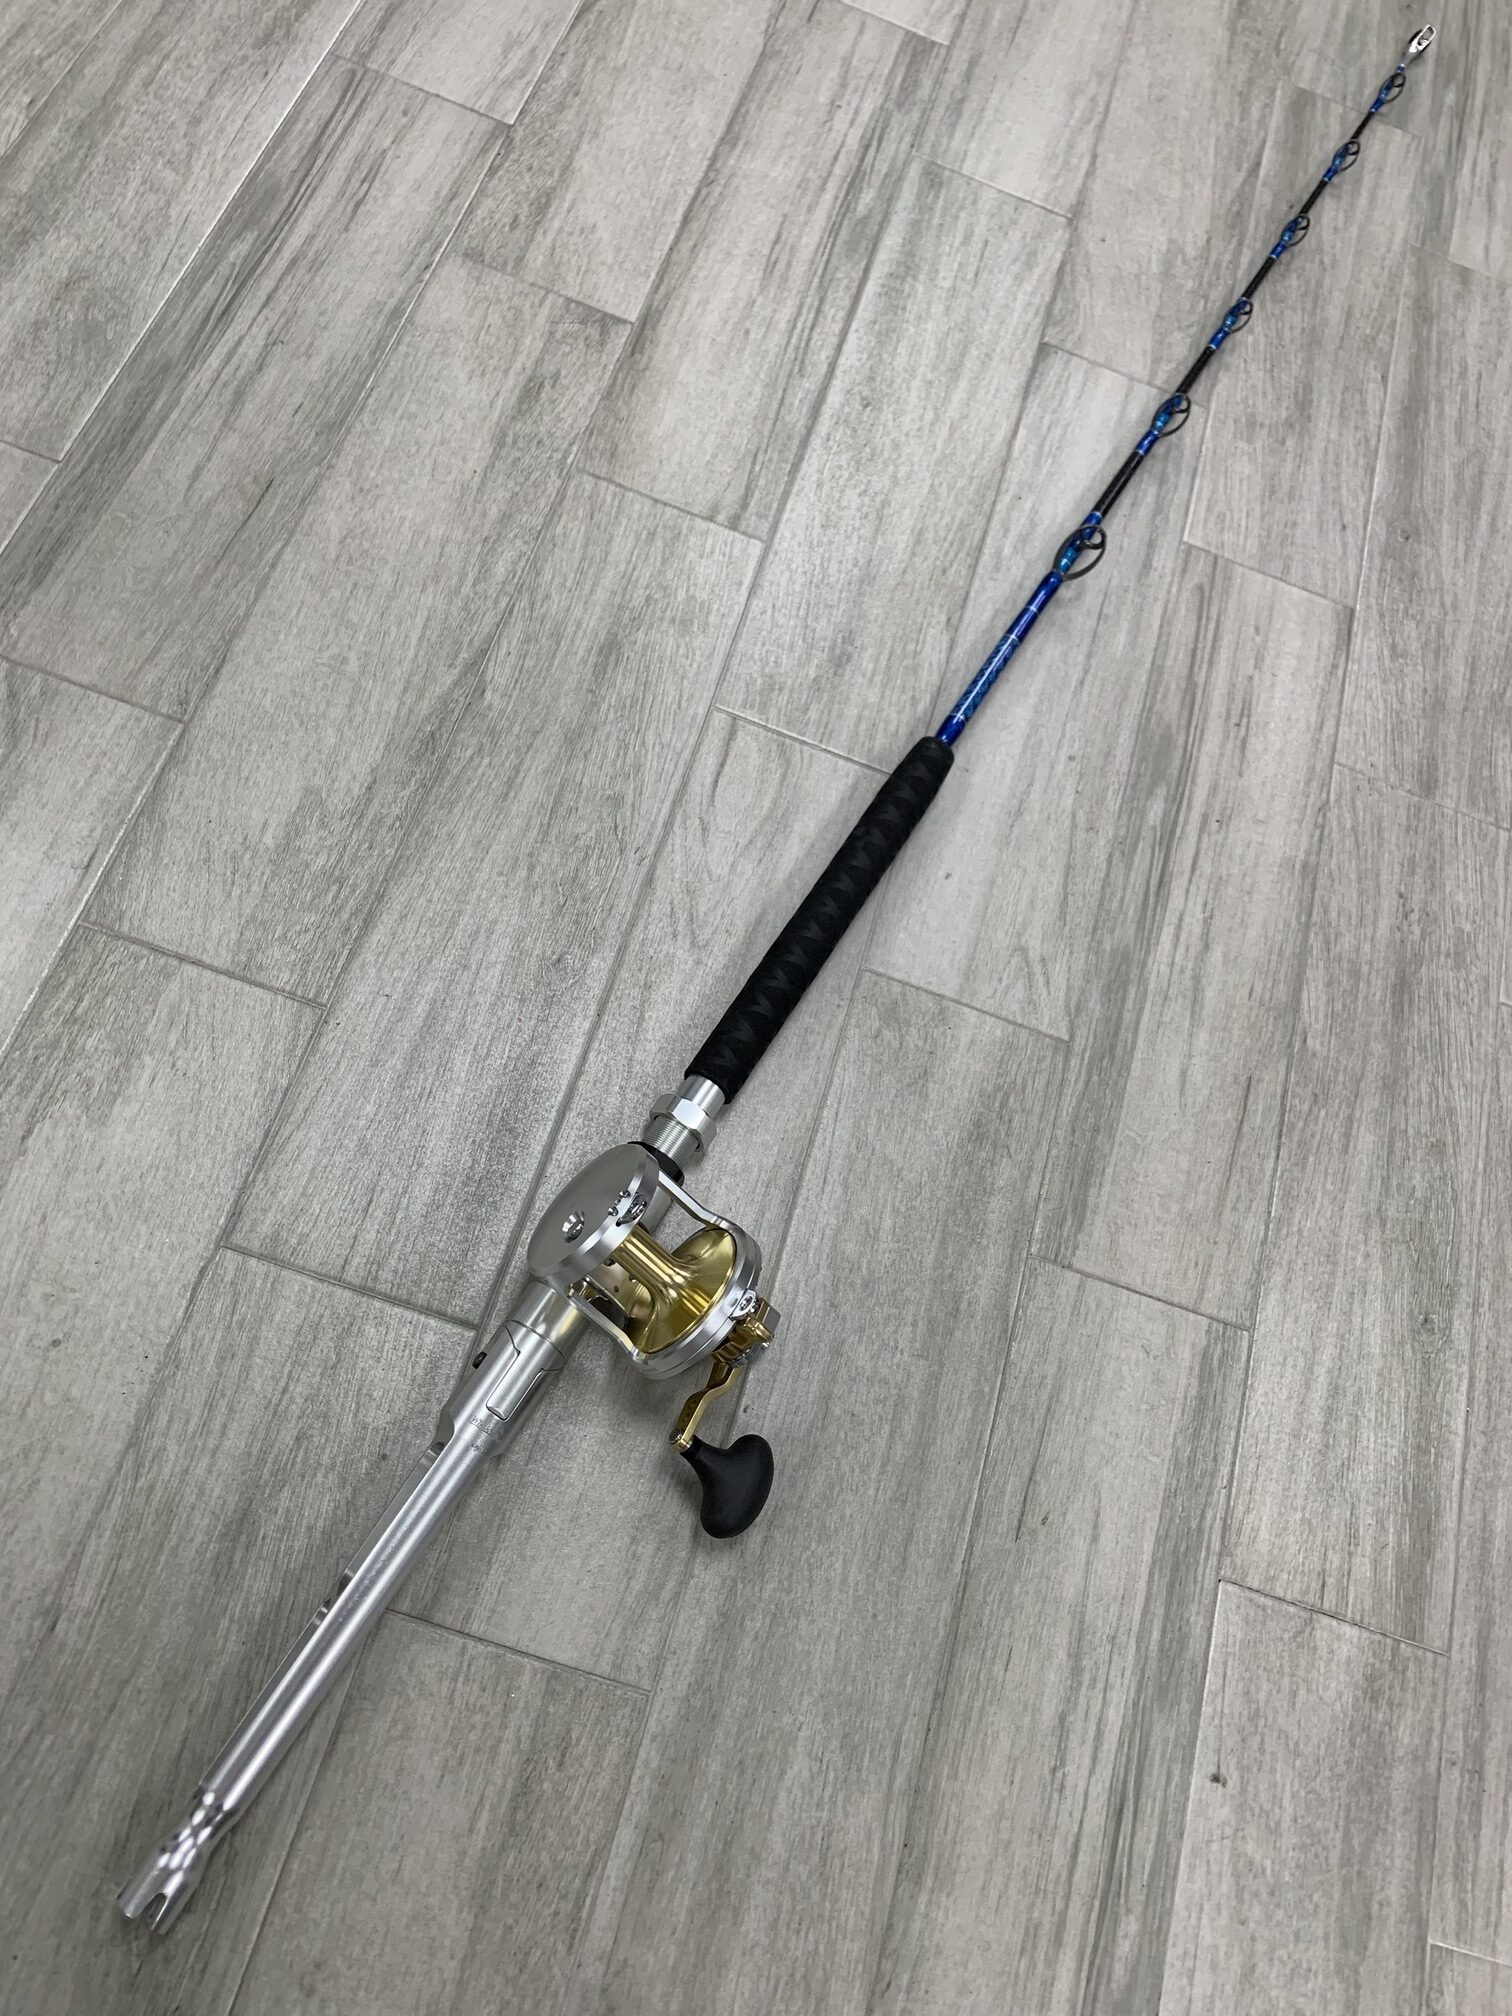  Fishing Rod & Reel Combos - Trolling / Fishing Rod